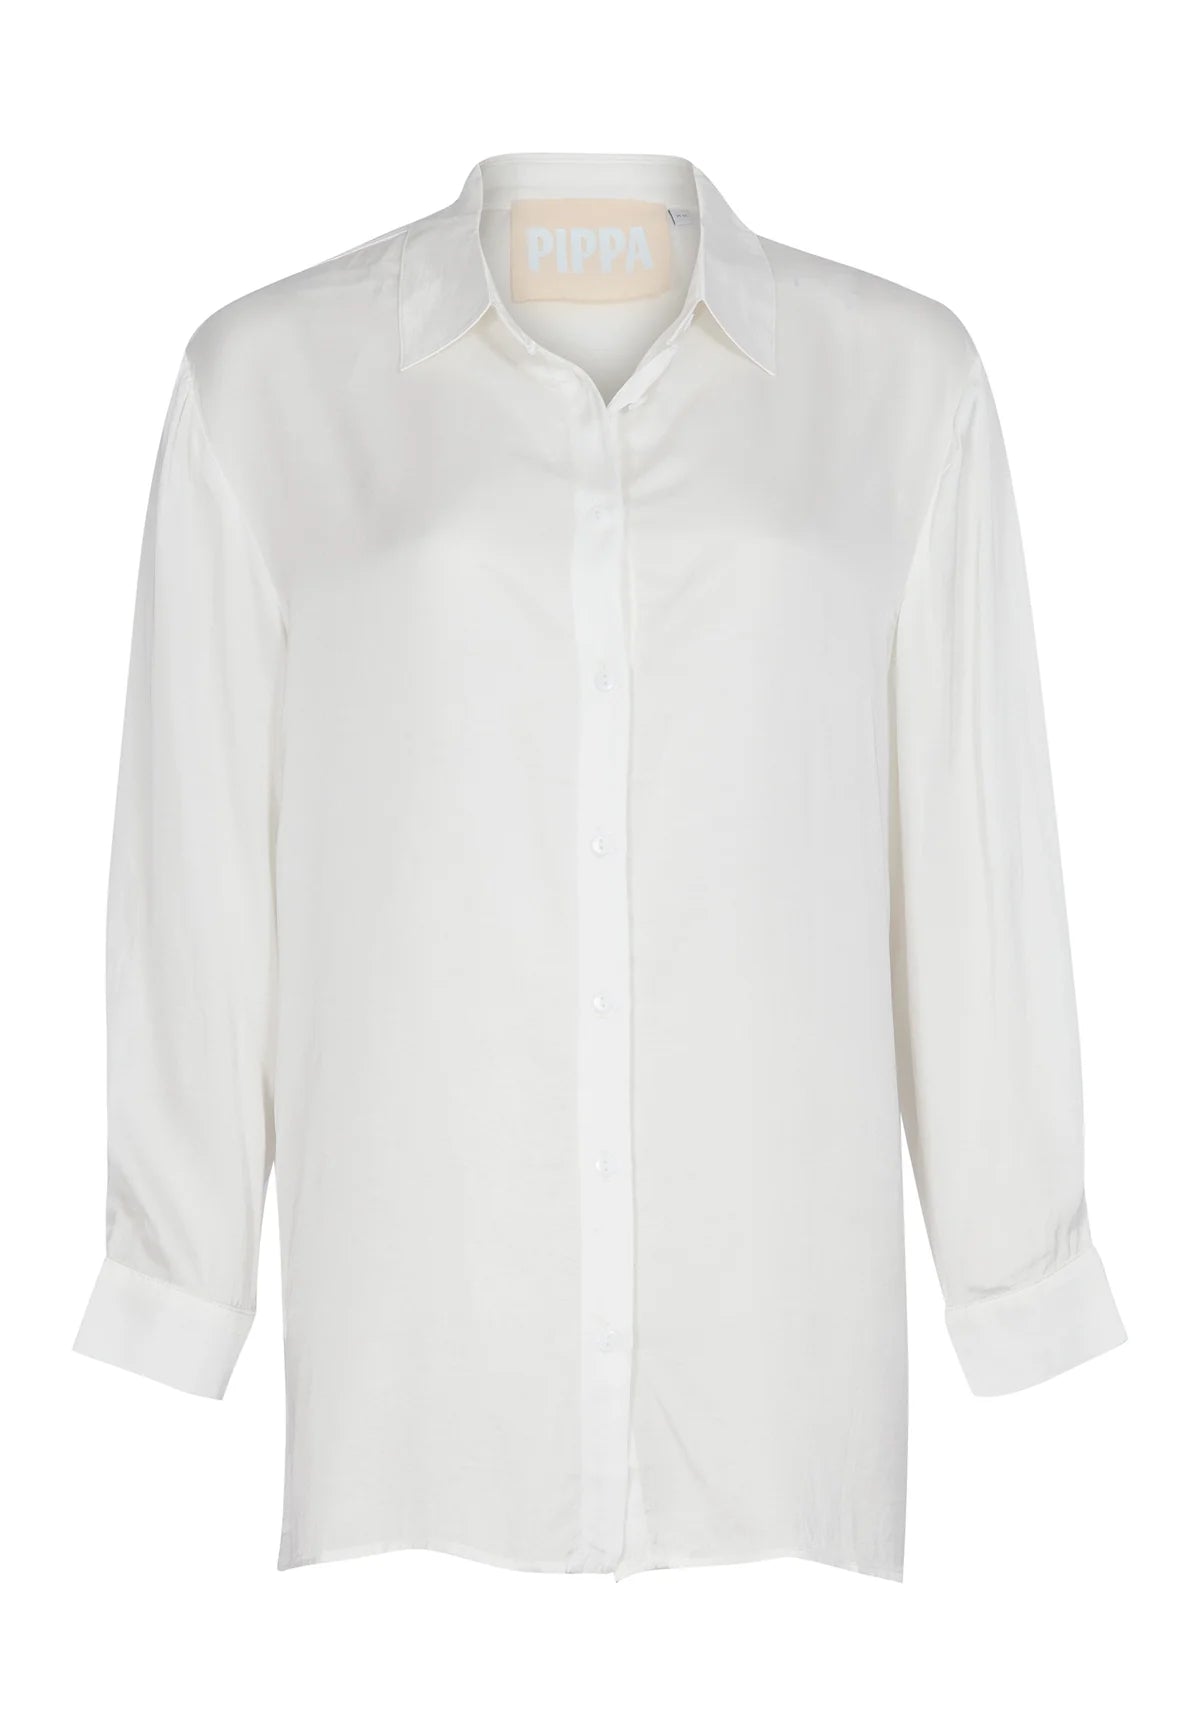 Sammi Shirt in White - Something about Sofia